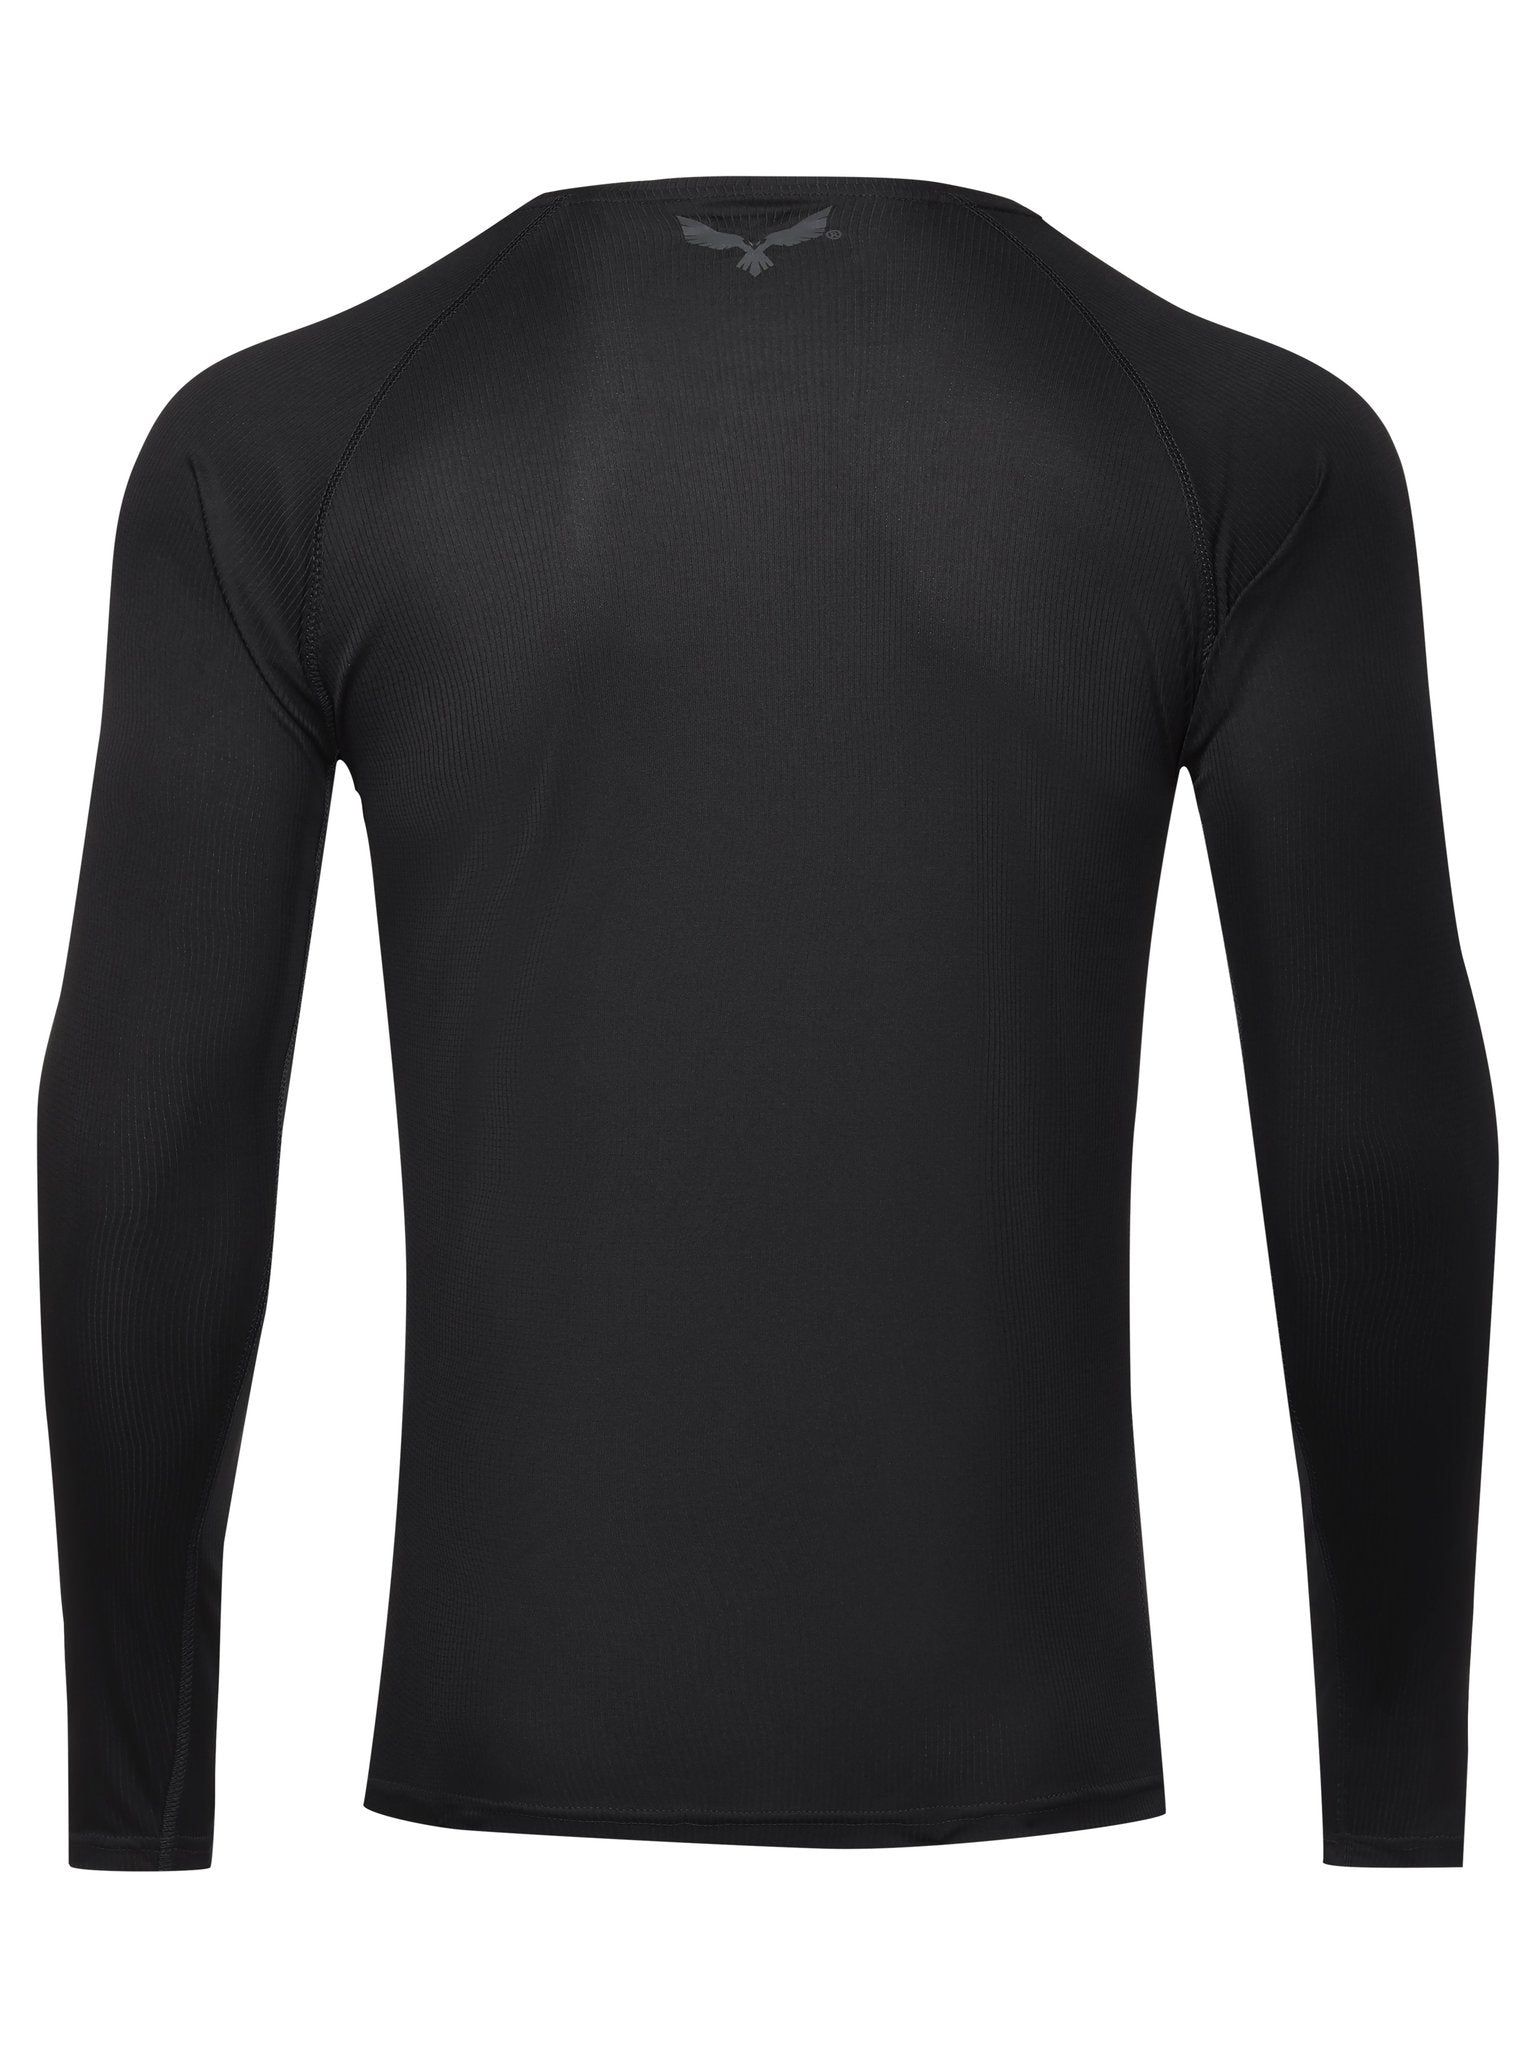 Scott Long Sleeve Shirt - Black